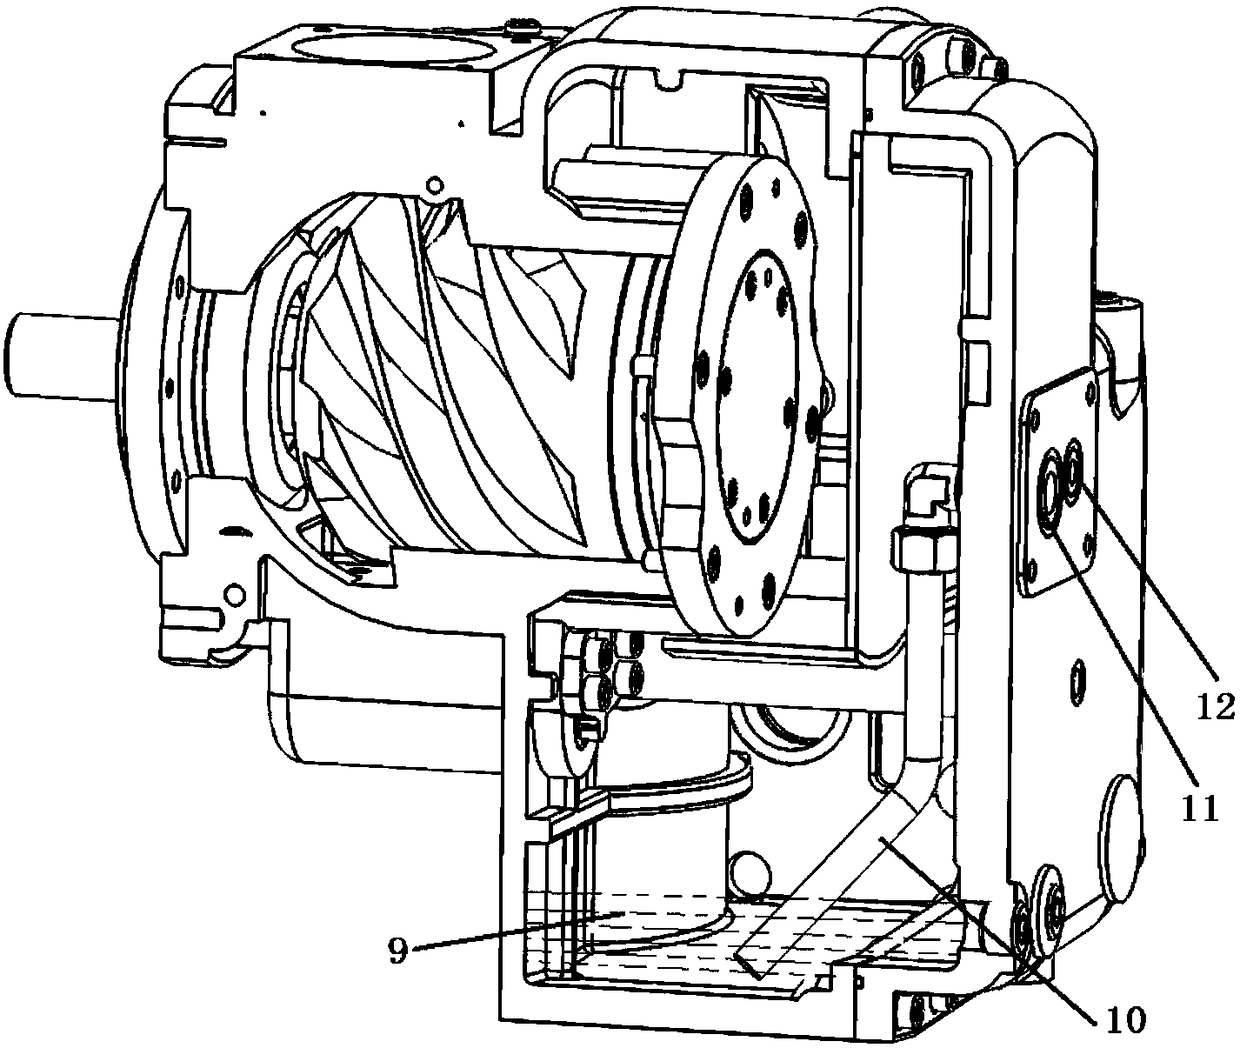 Movable type single screw compressor